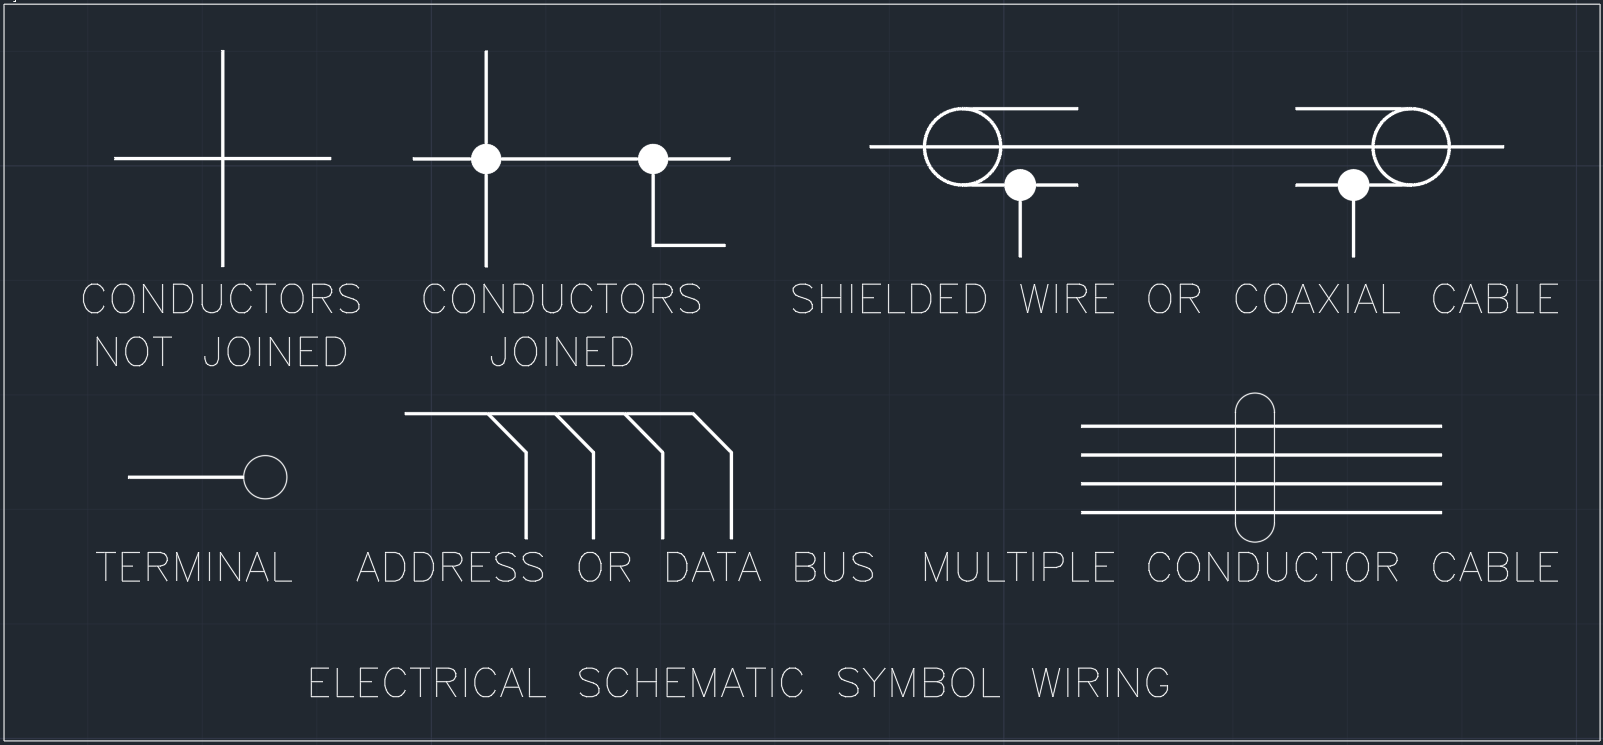 Electrical Schematic Symbol Wiring